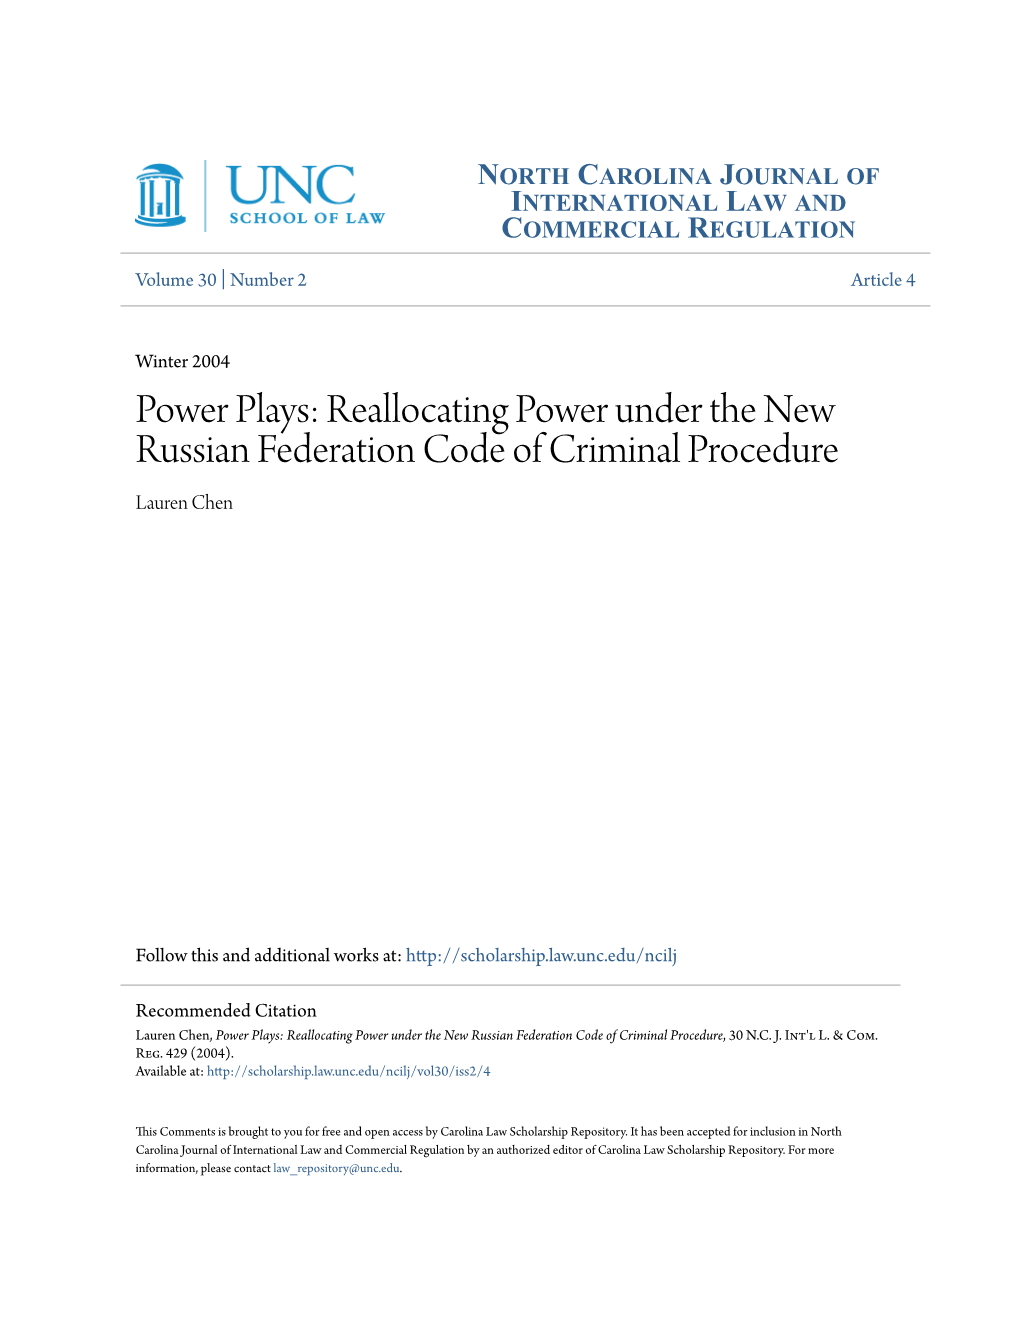 Reallocating Power Under the New Russian Federation Code of Criminal Procedure Lauren Chen